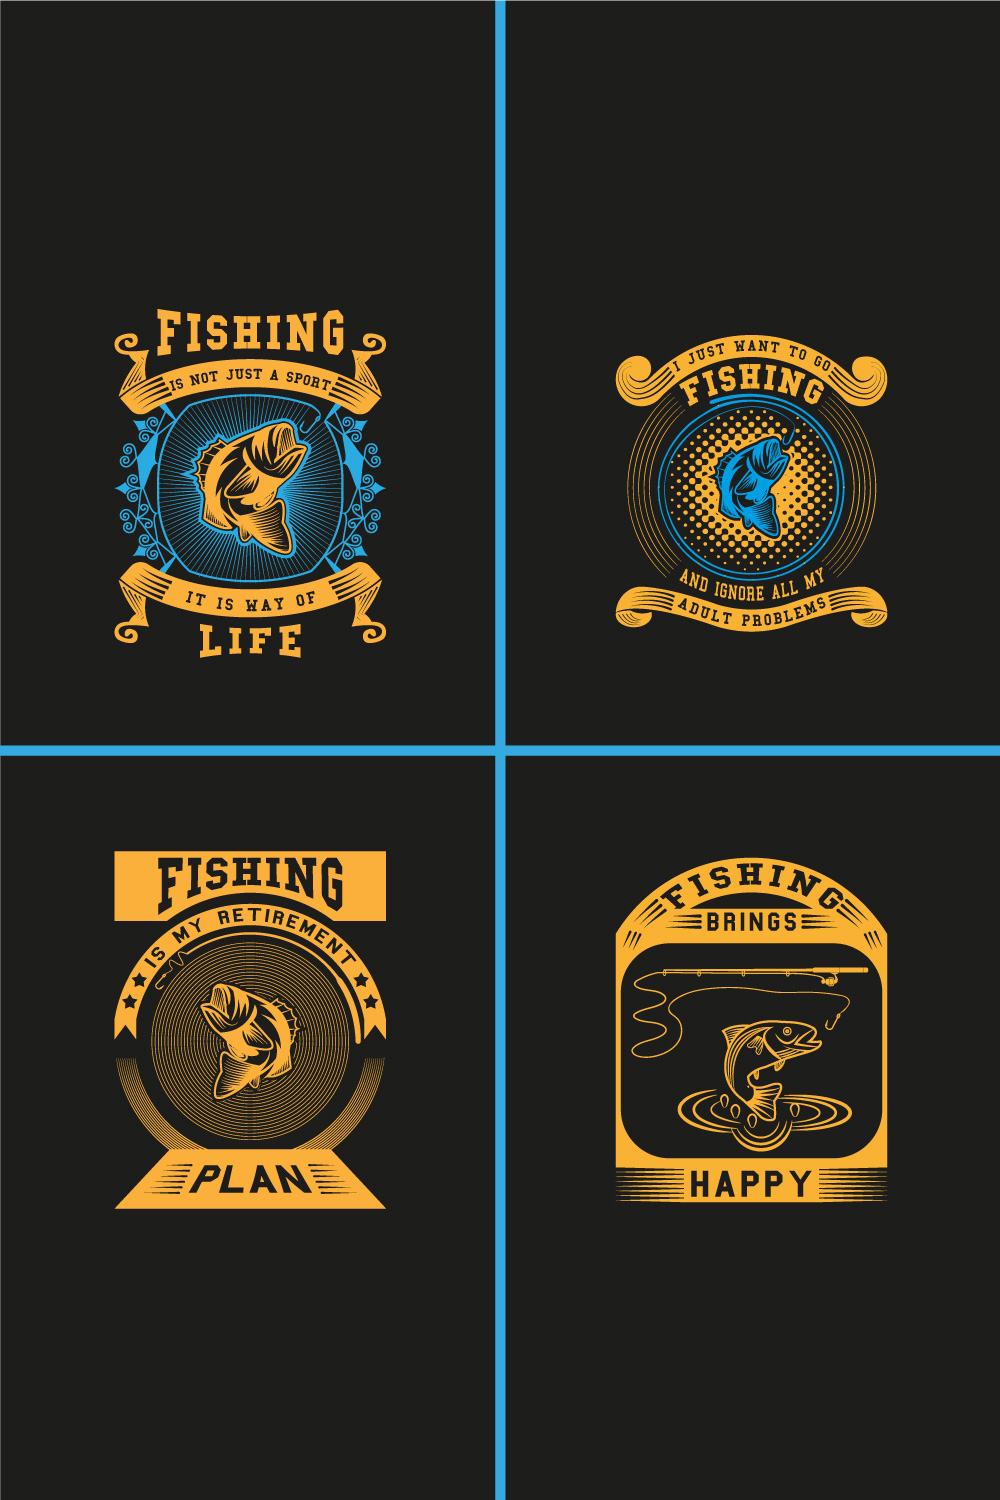 04 Fishing-t-shirt design pinterest preview image.